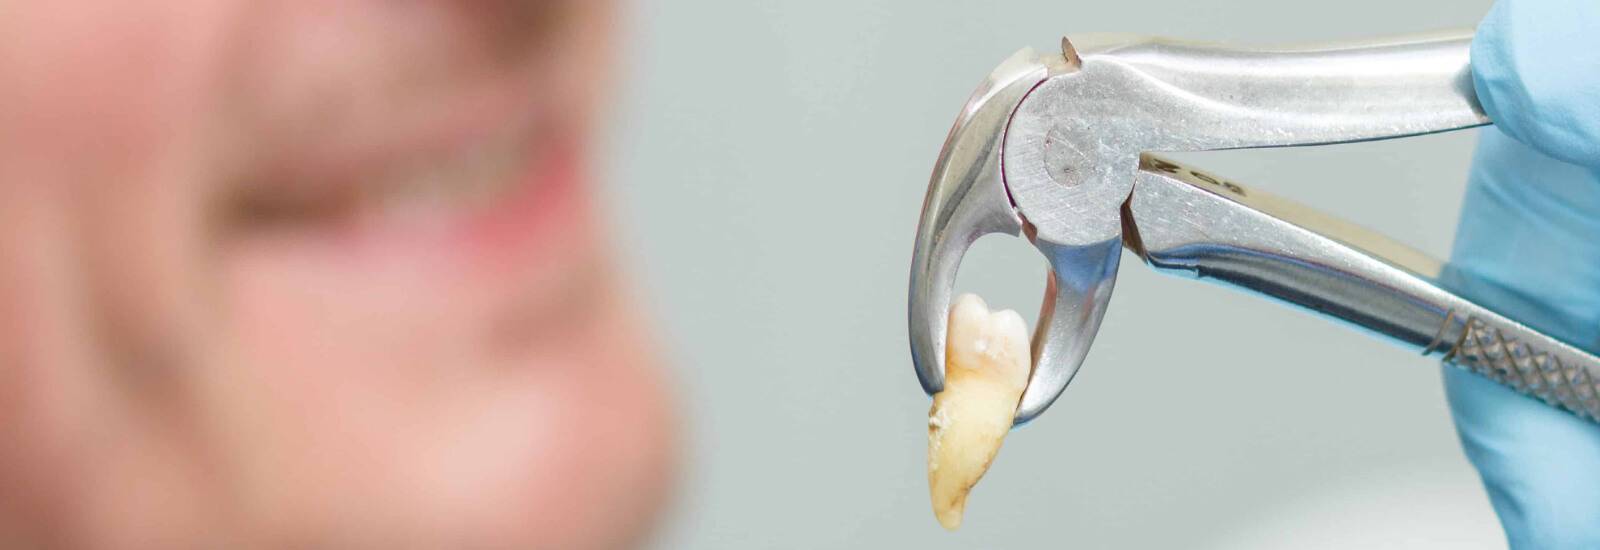 Tooth-Extraction-Procedure